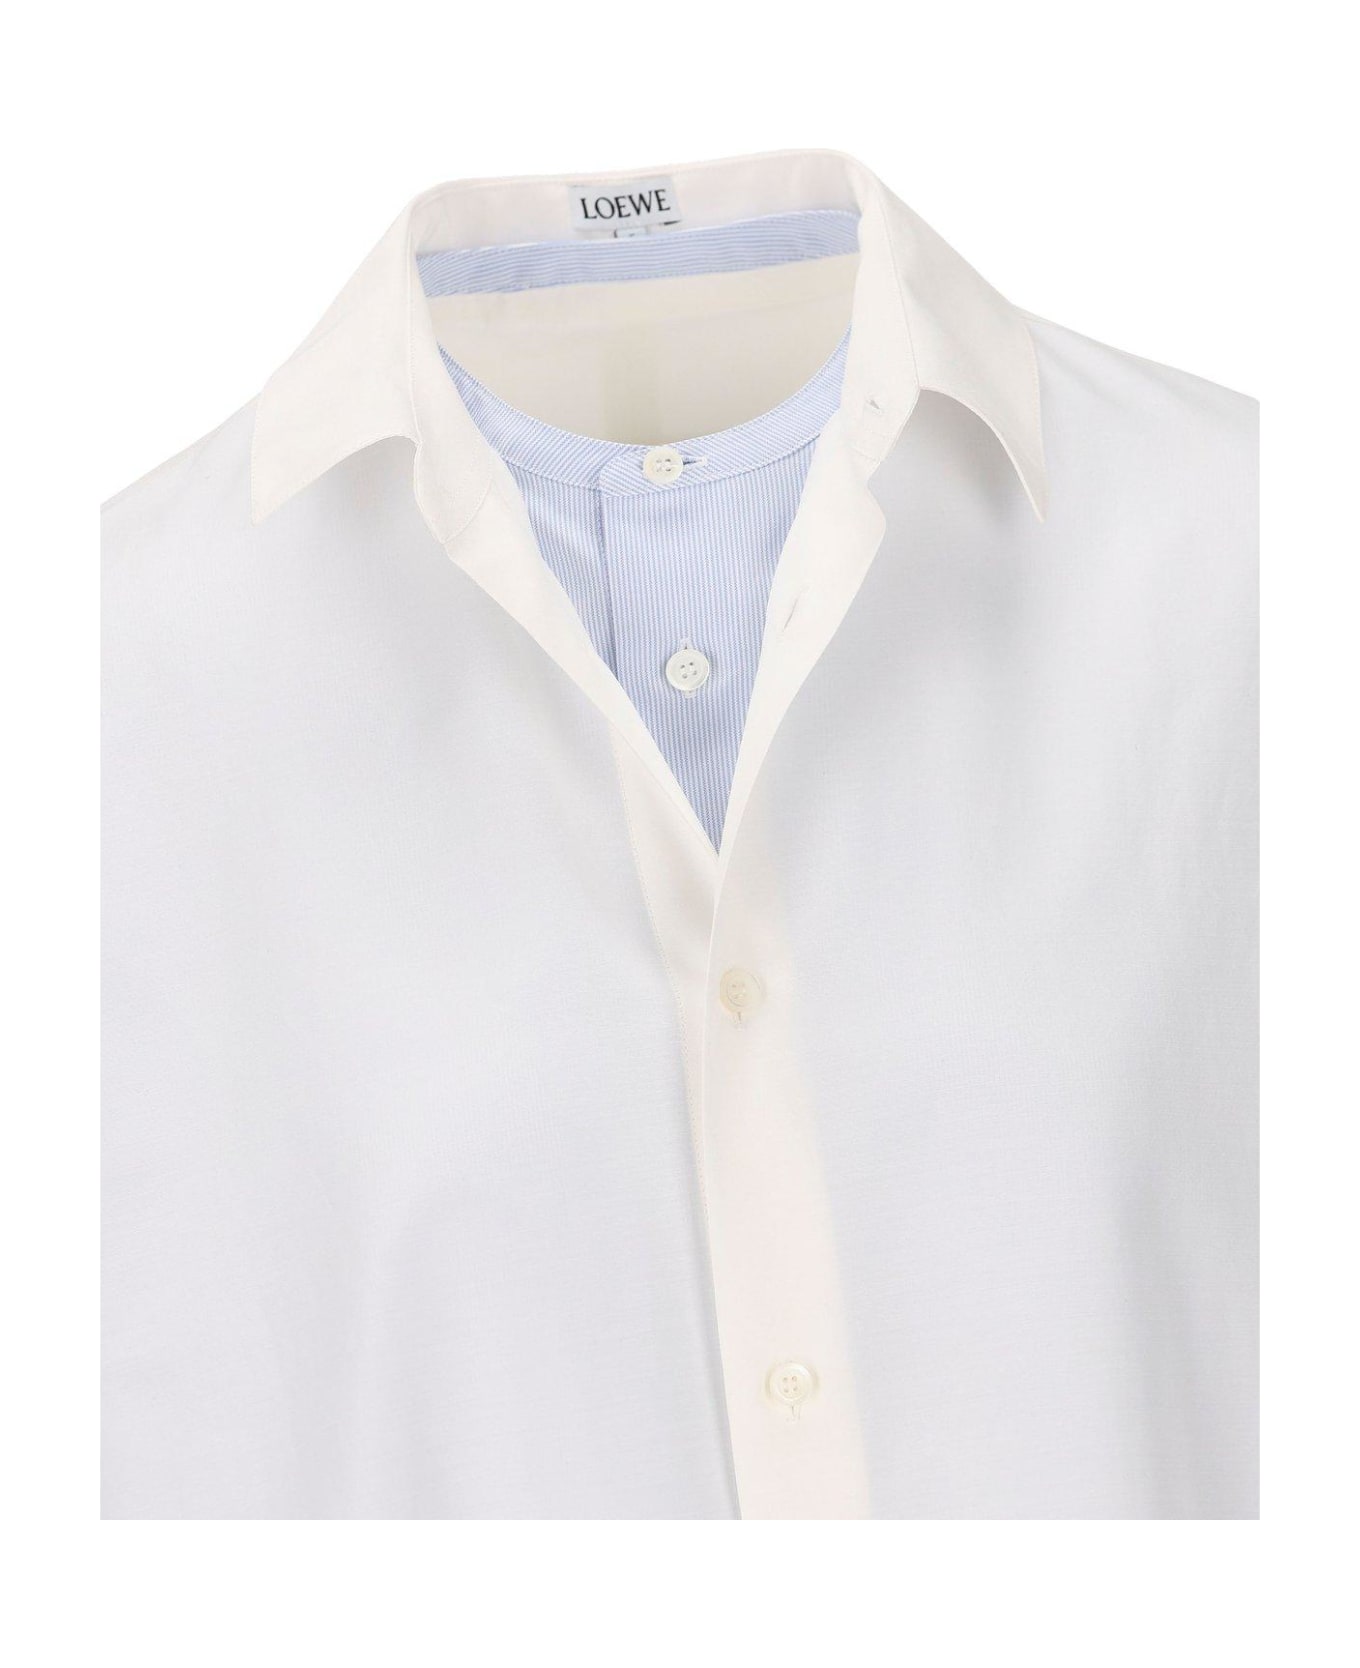 Loewe Double Layered Shirt Dress - White/blue